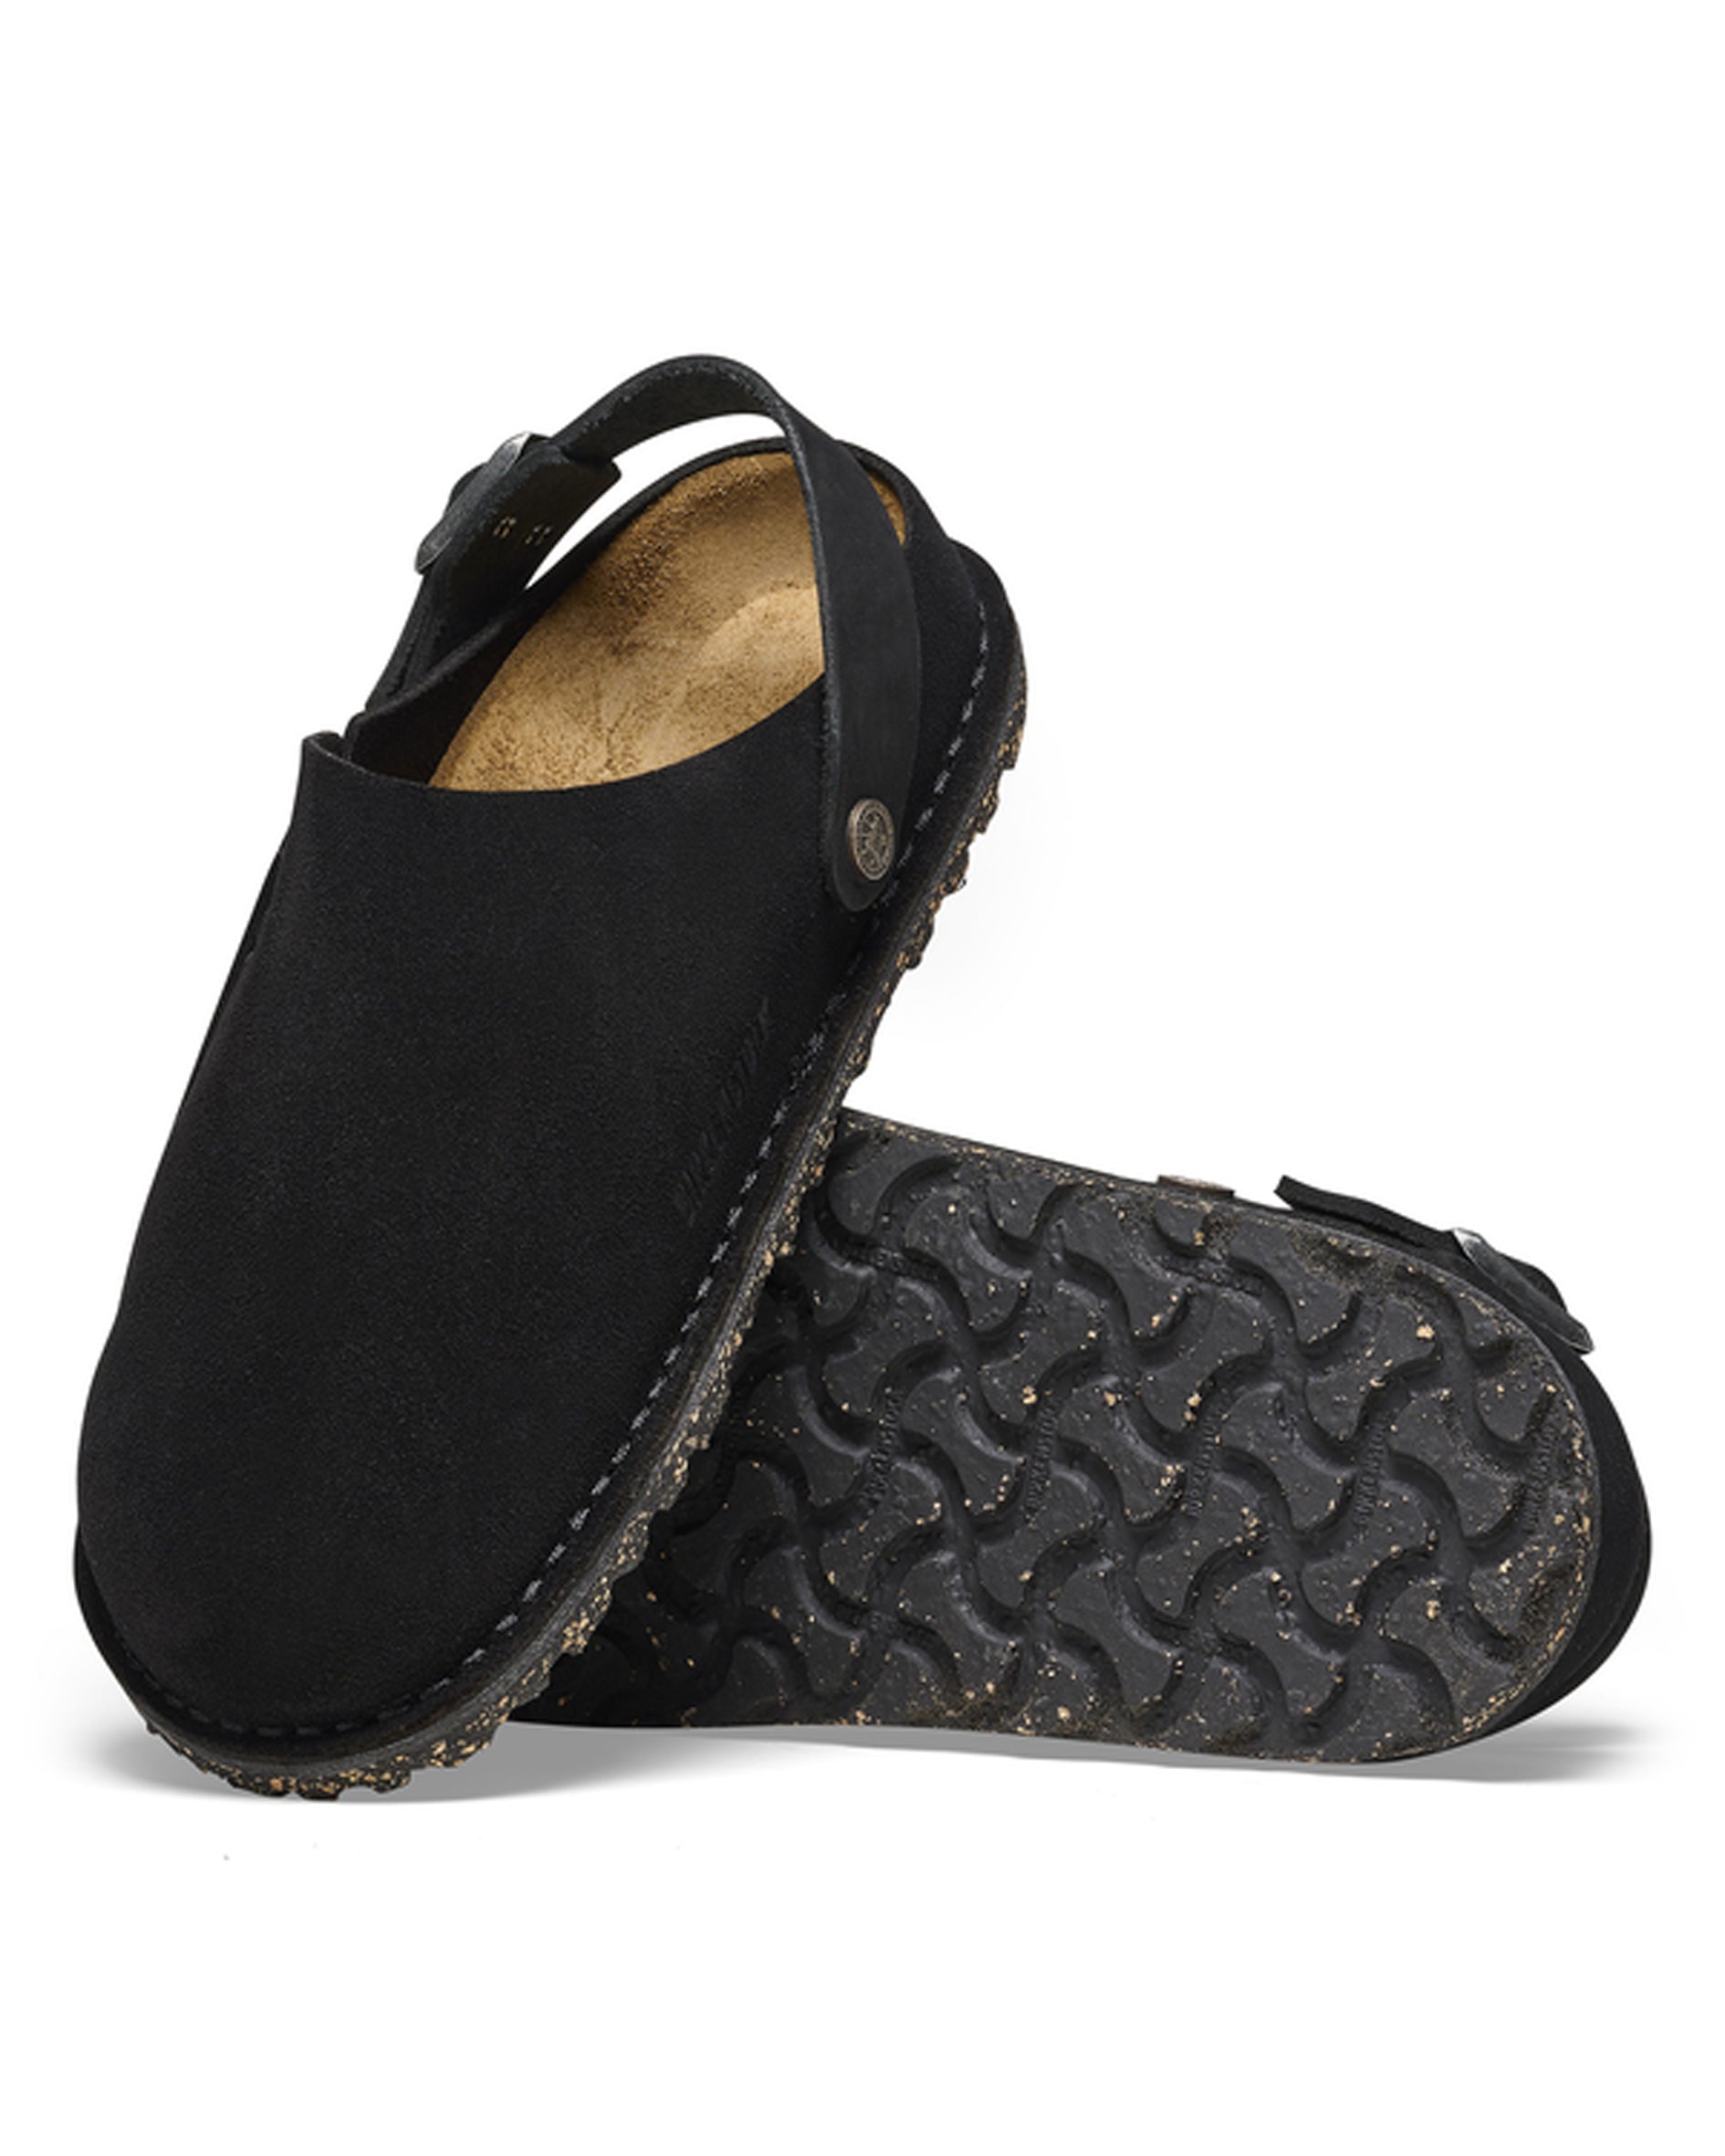 Lutry Premium Black Suede Leather Clogs